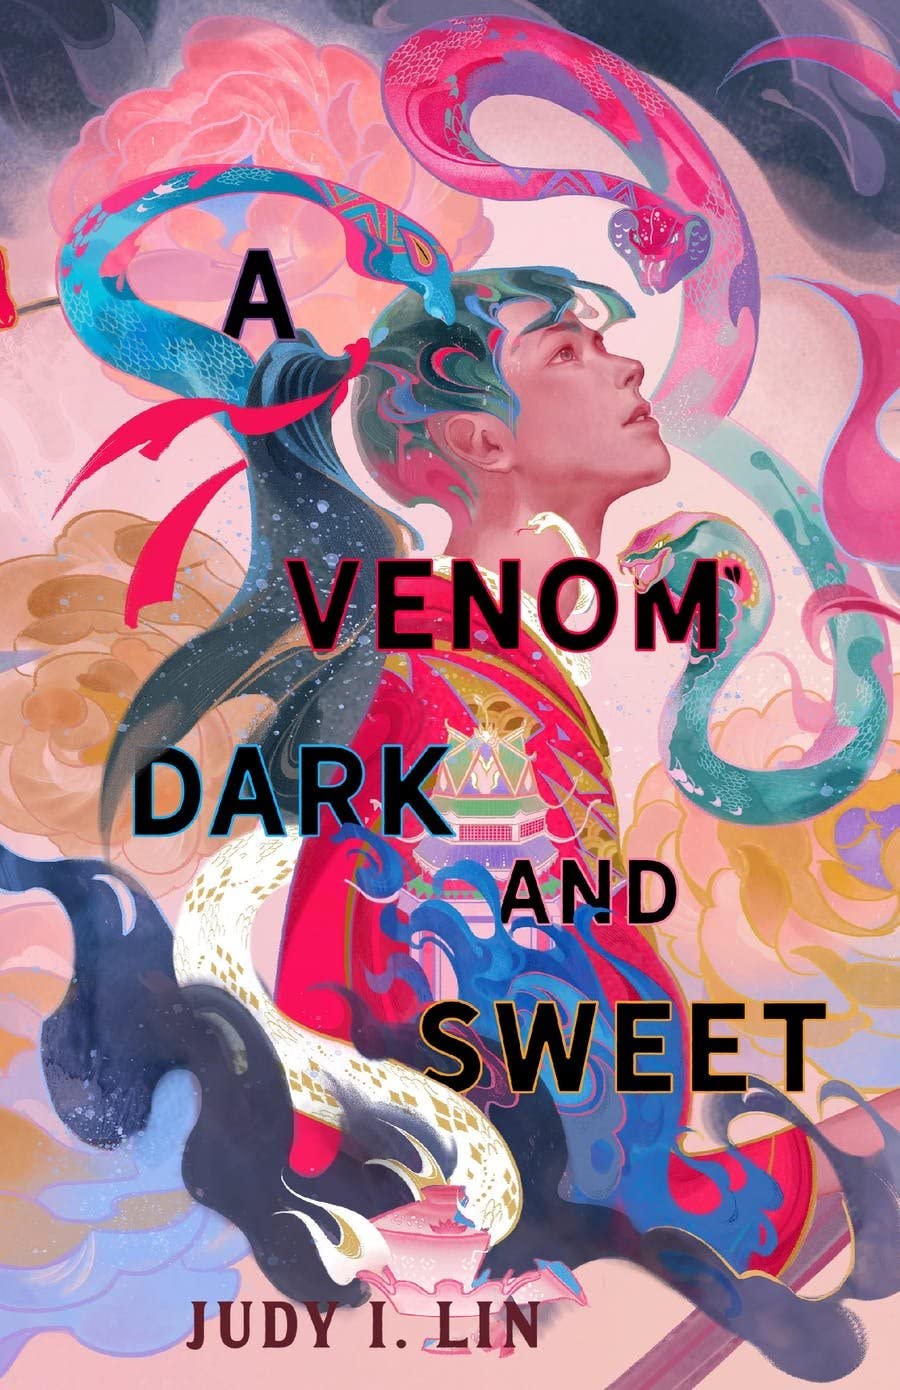 Book Venom Dark and Sweet Judy I. Lin